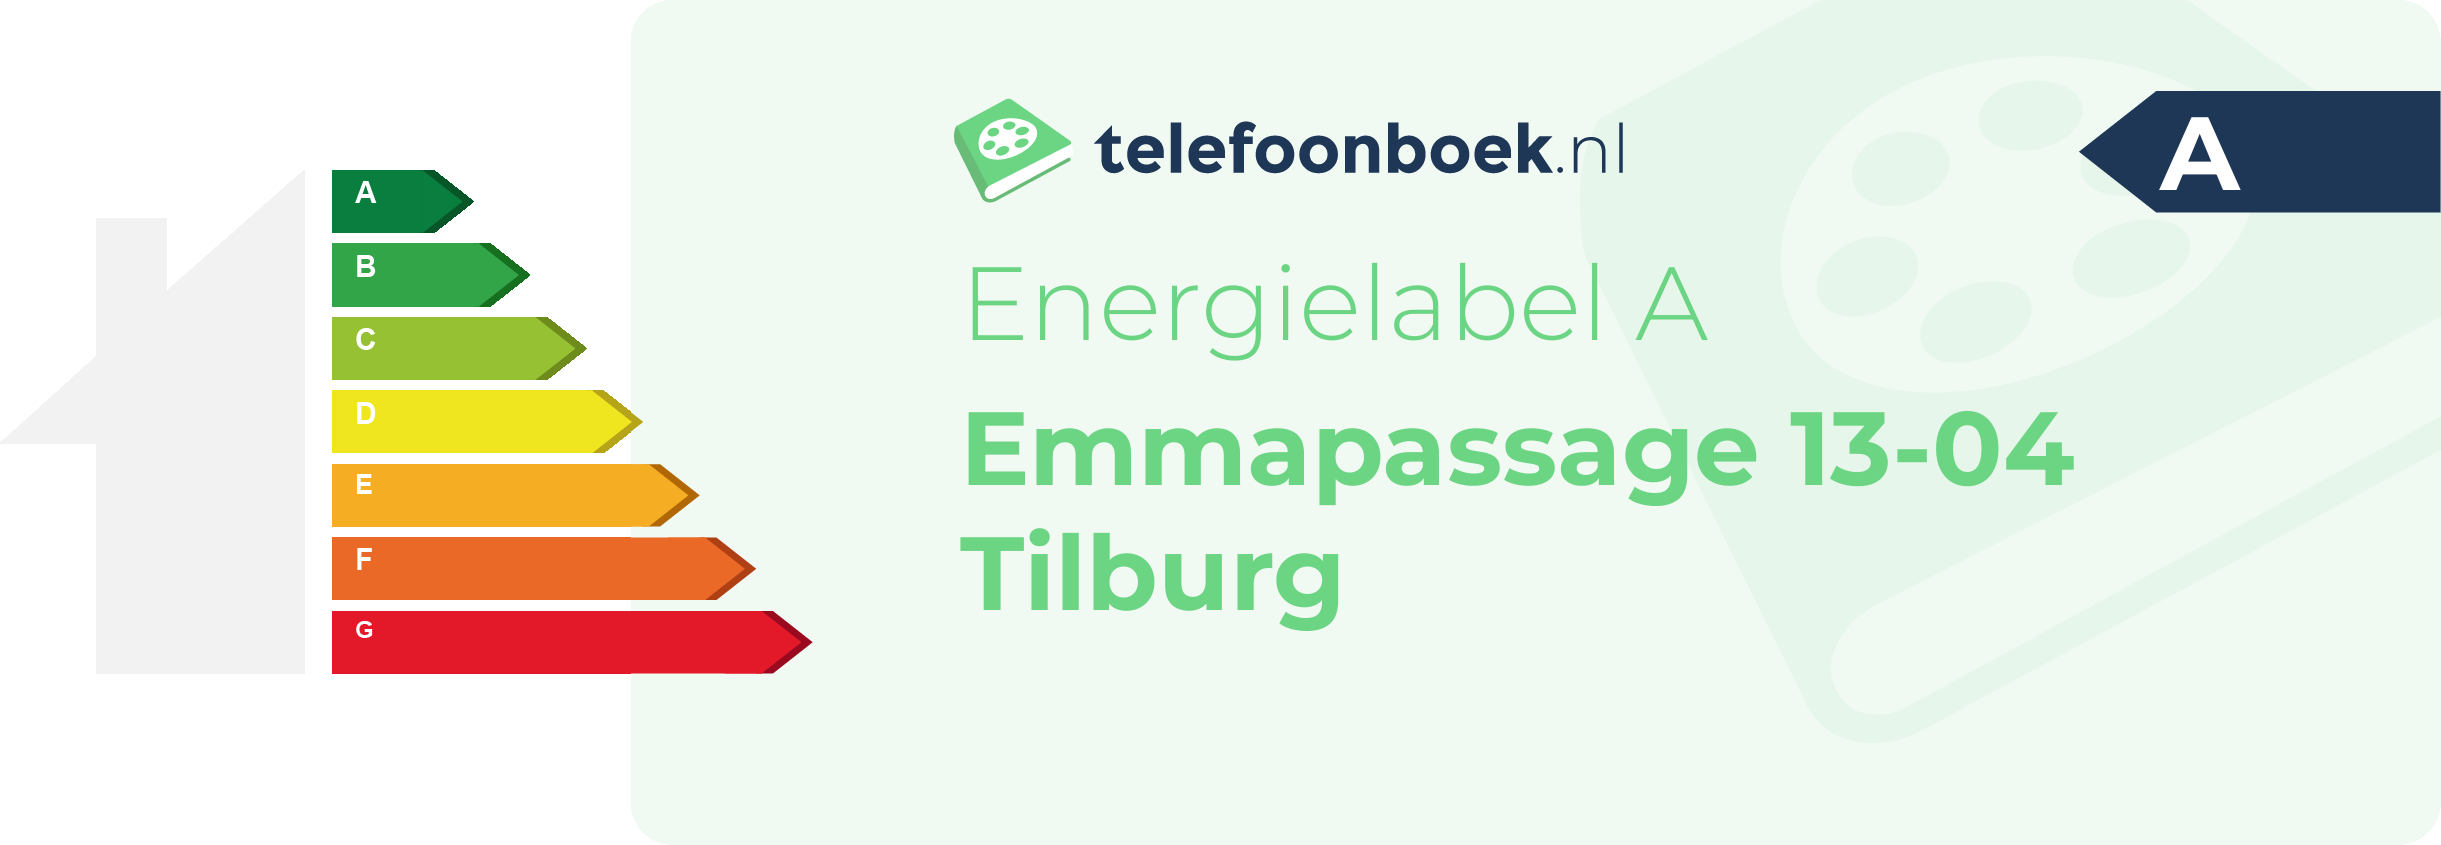 Energielabel Emmapassage 13-04 Tilburg